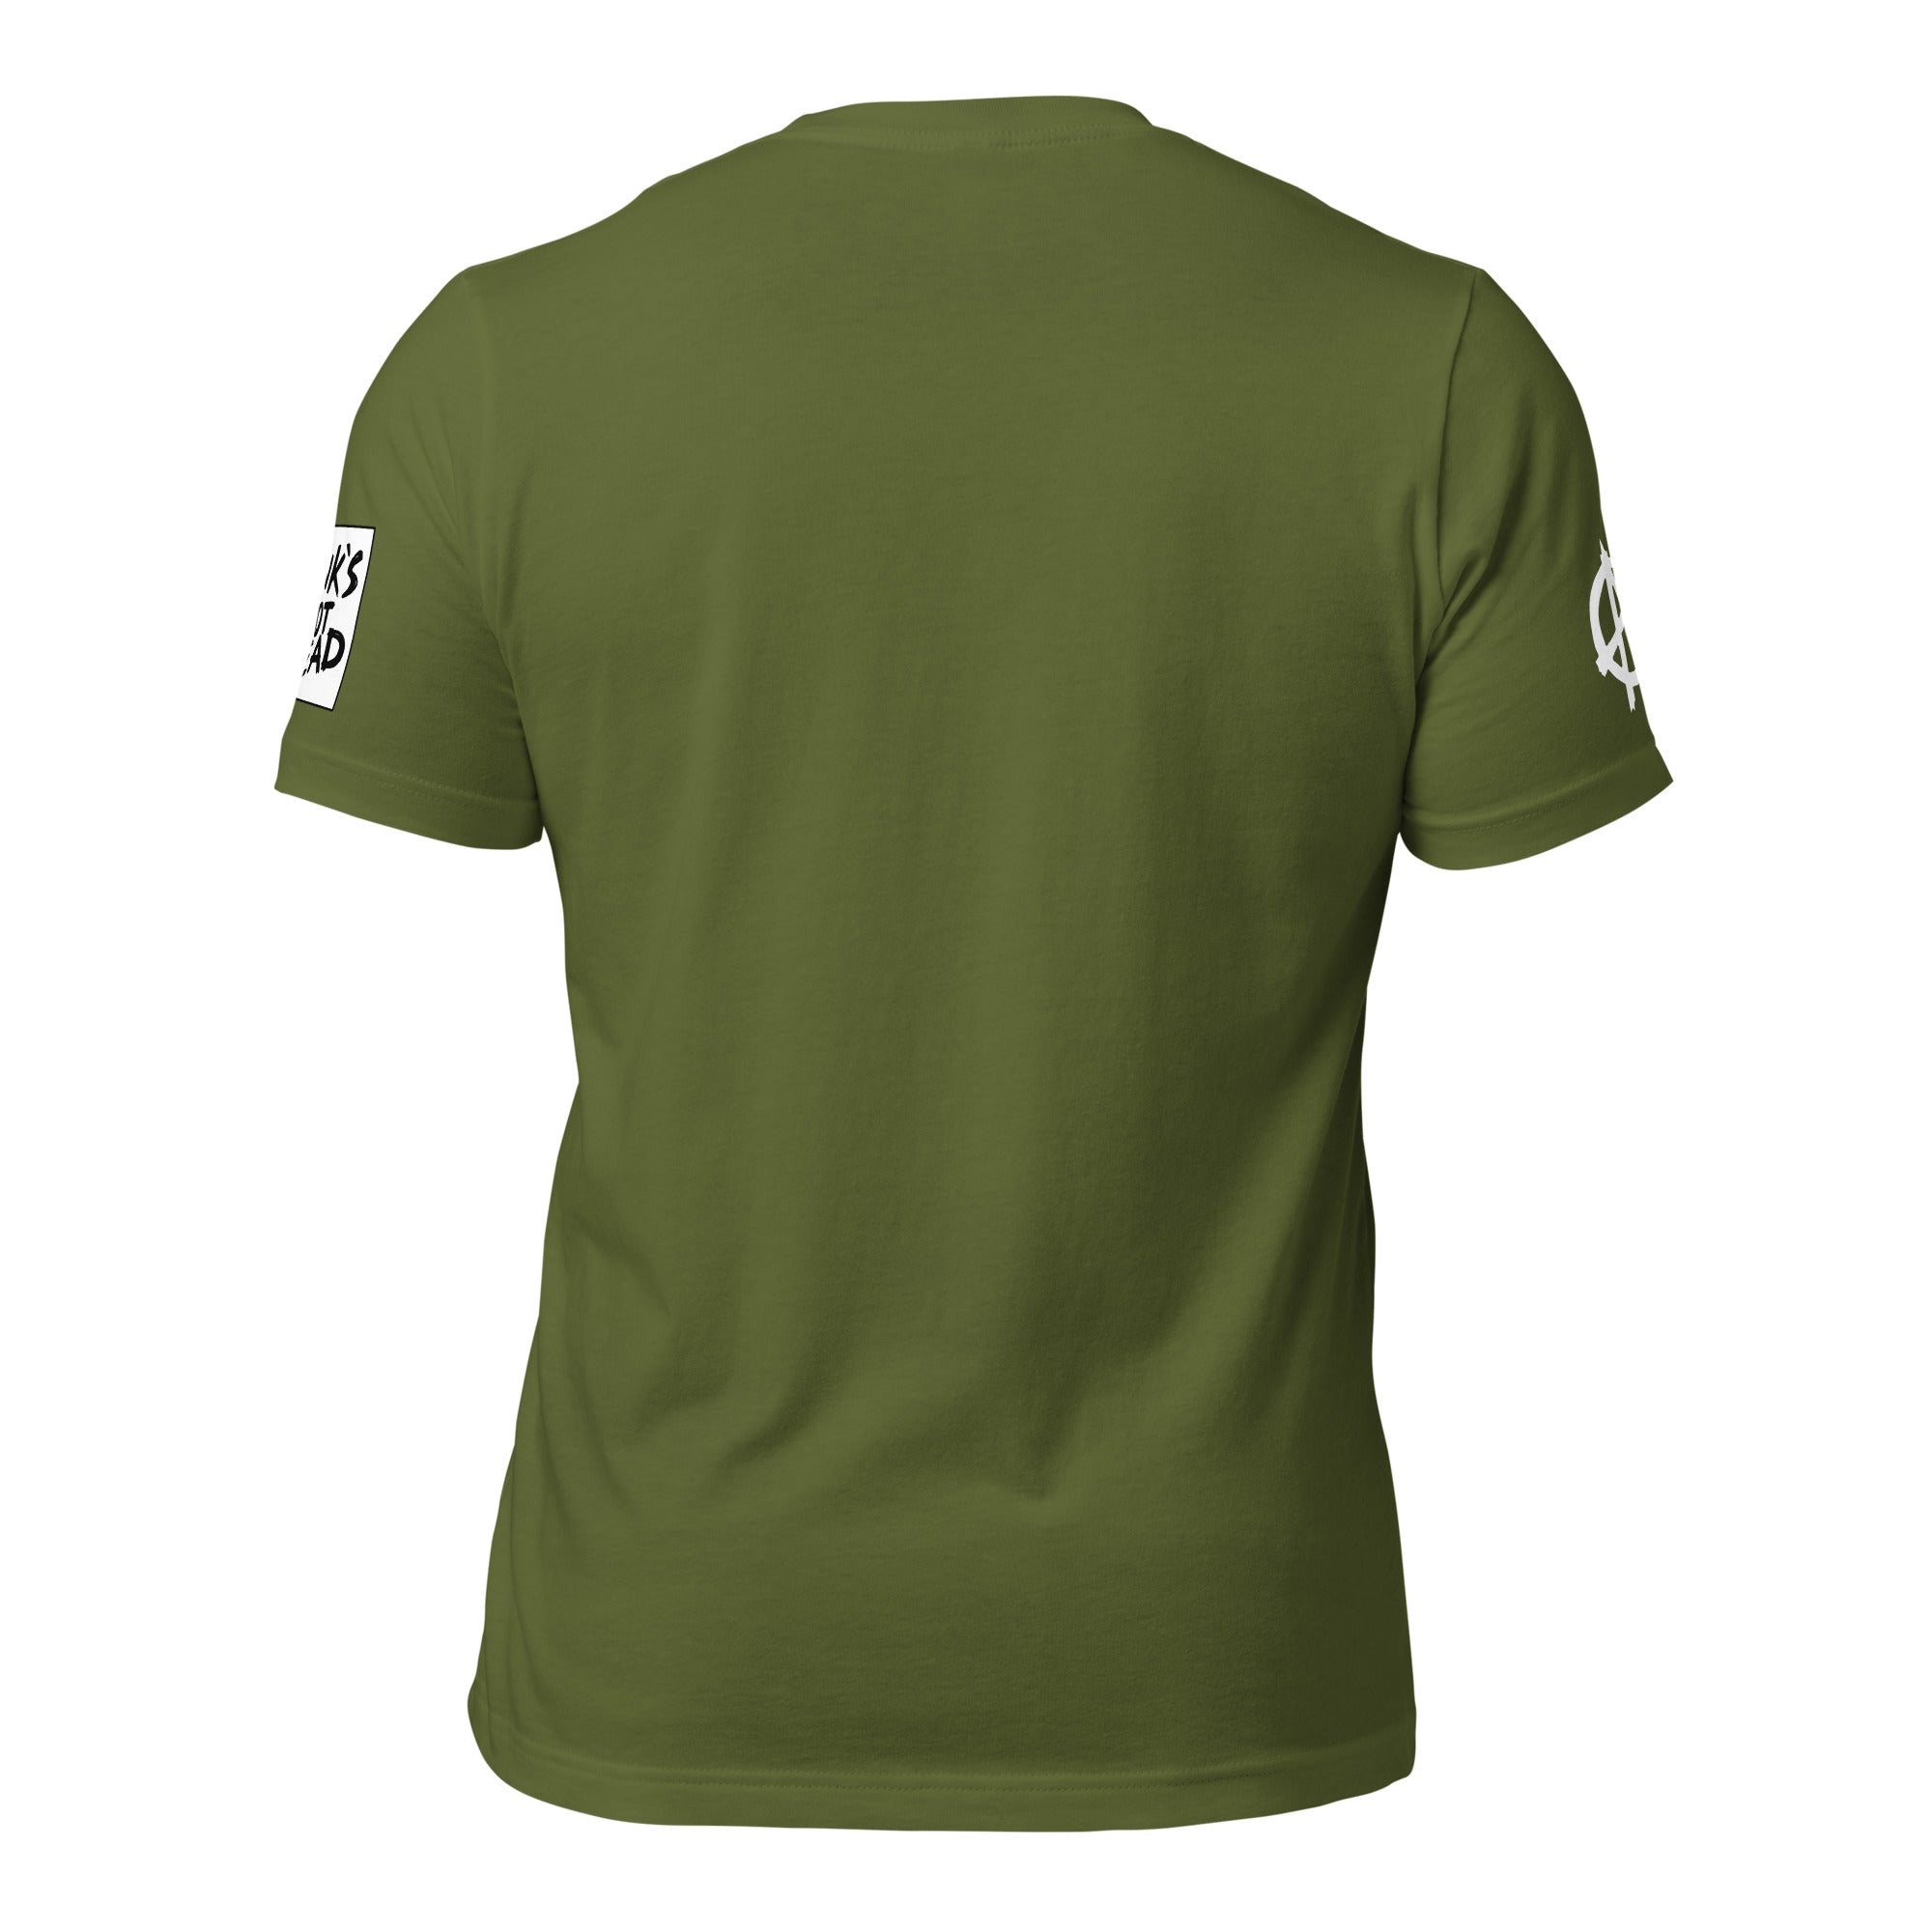 Unisex Crew Neck T-Shirt - Punk Rock Series Sector 24 - GRAPHIC T-SHIRTS